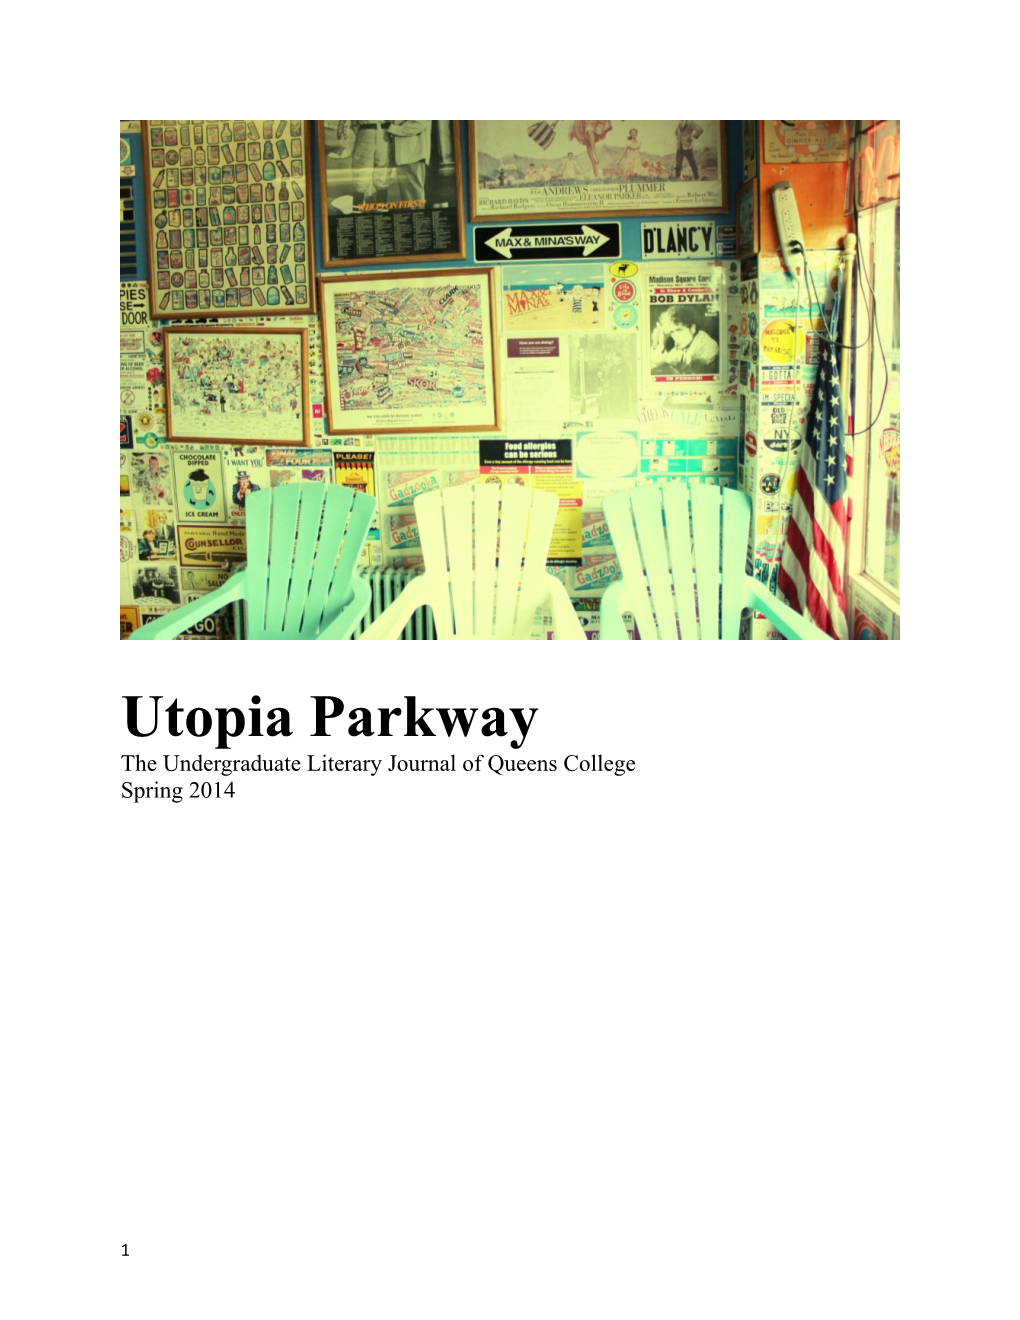 Utopia Parkway the Undergraduate Literary Journal of Queens College Spring 2014